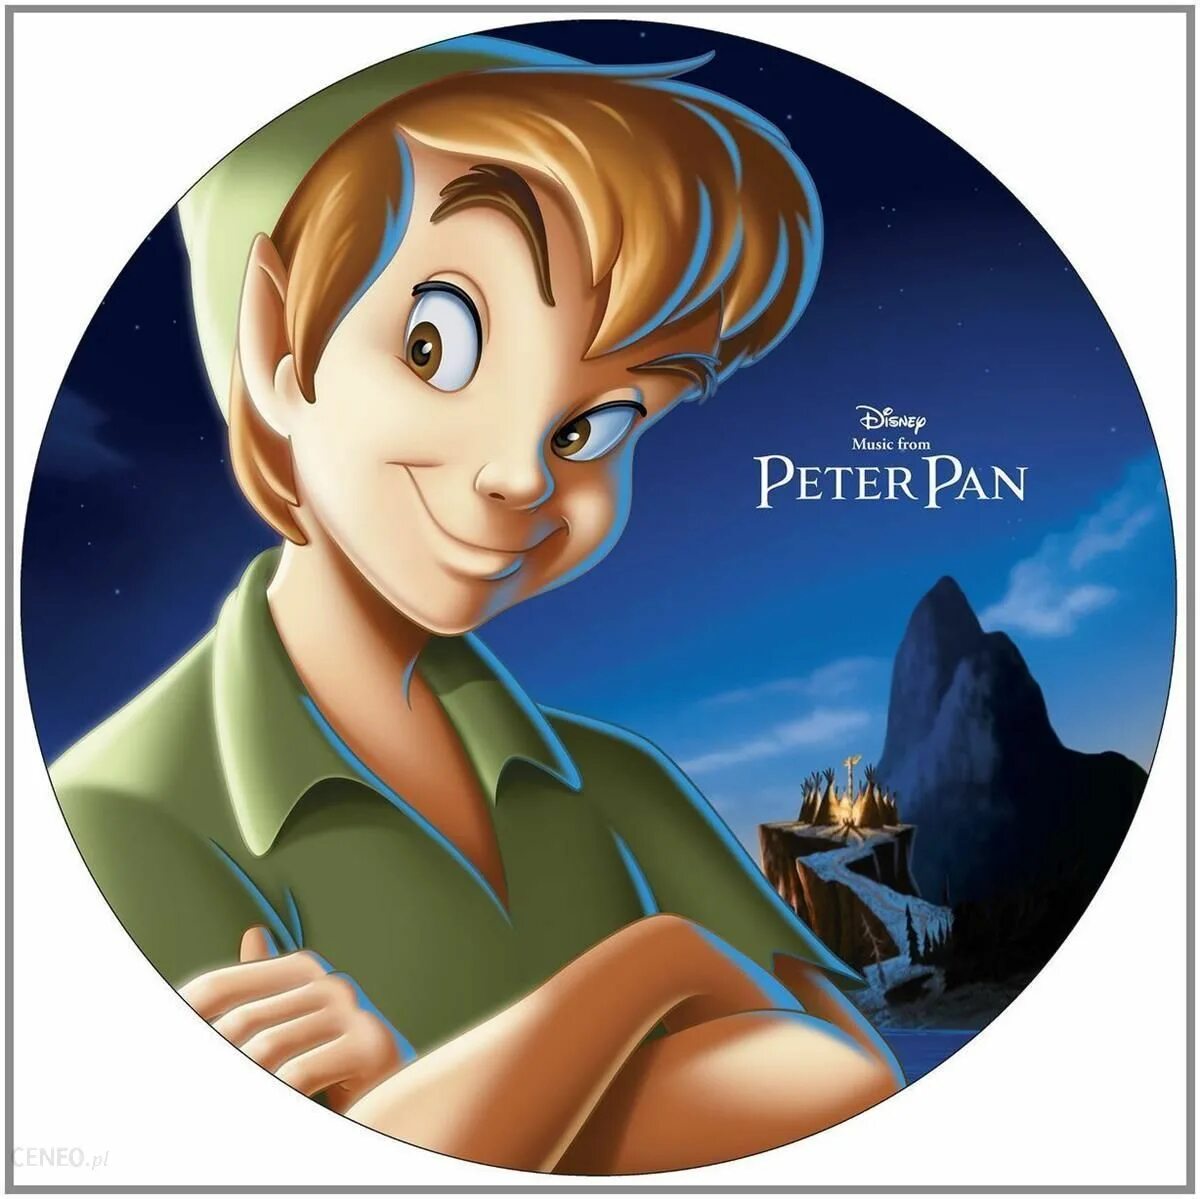 Peter Pan. Peter Pan Musical. Питер Пэн пластинка. Дисней музыка. Саундтрек дисней